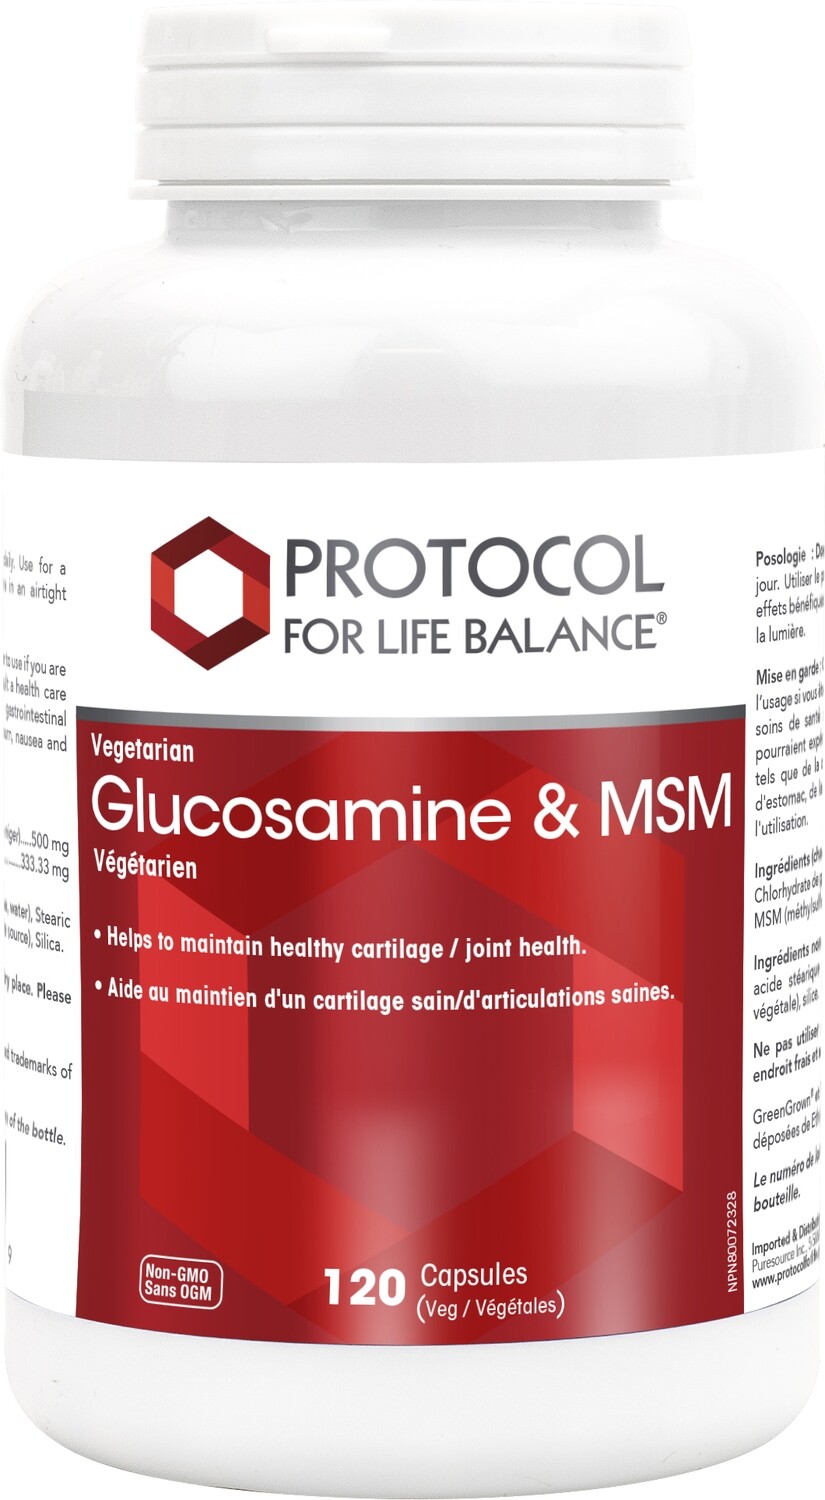 Glucosamine & MSM by Protocol for Life Balance